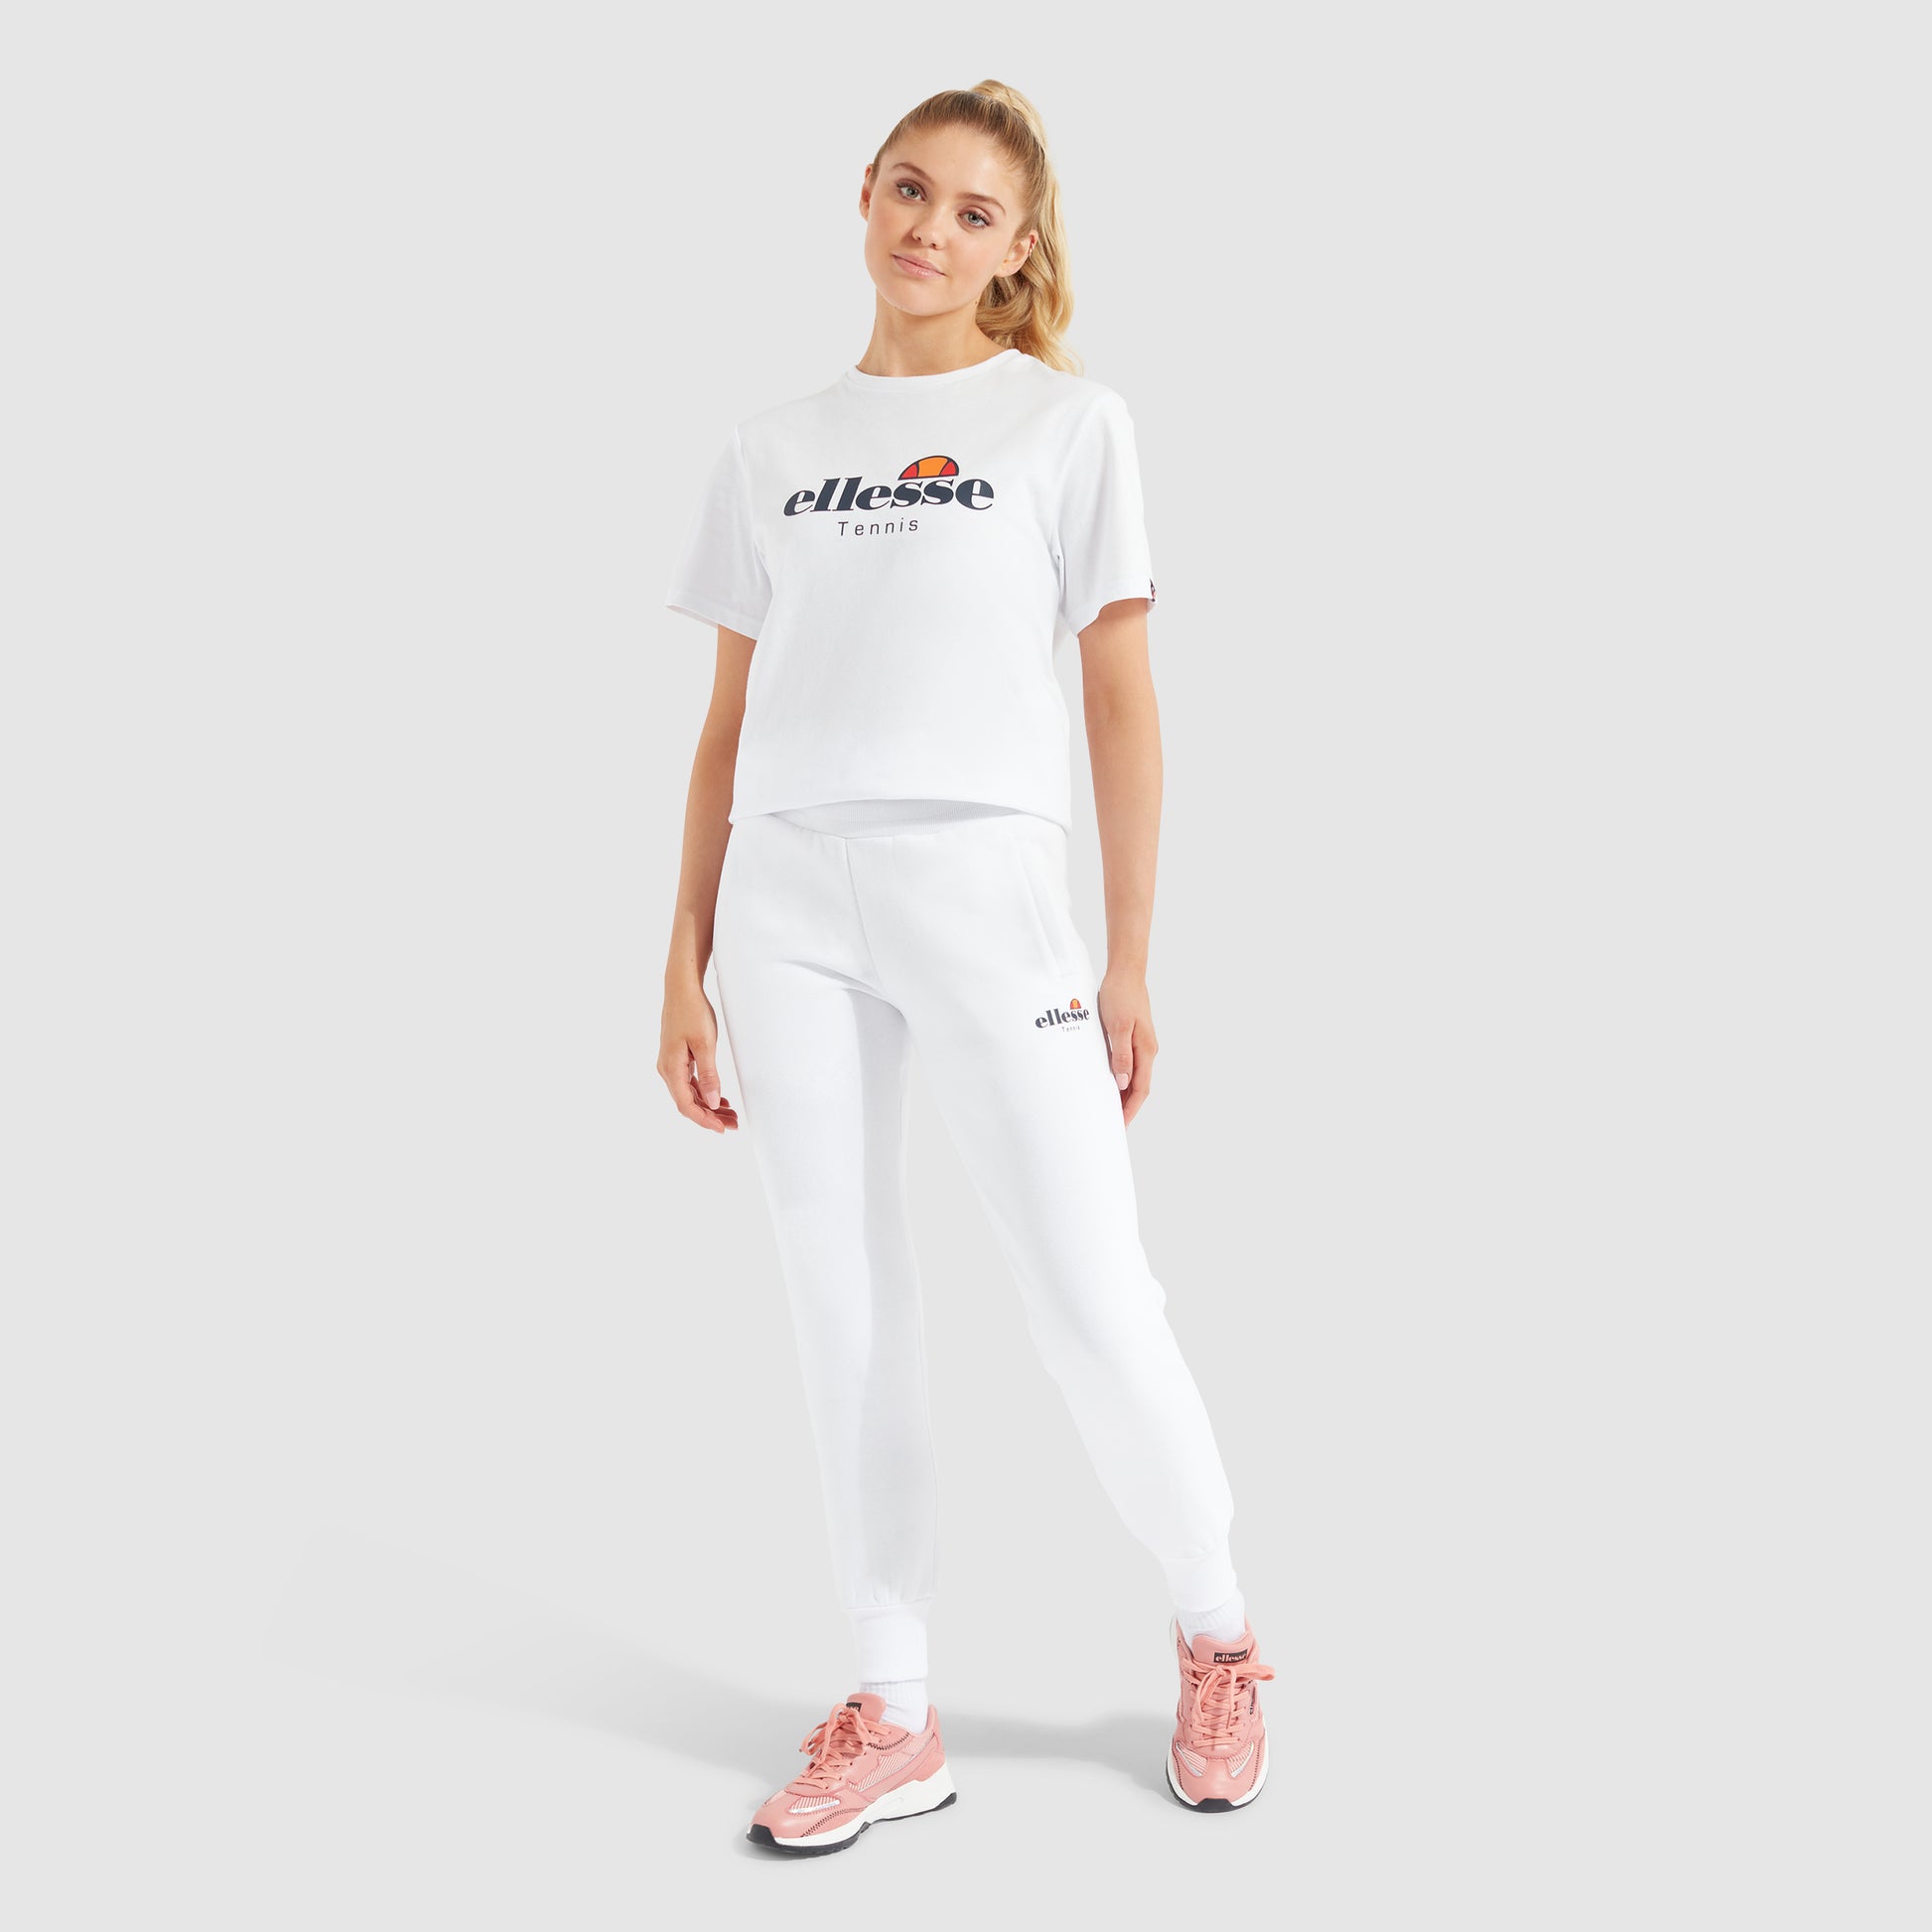 ellesse Tennis Women's Jogger – NewCo Brands